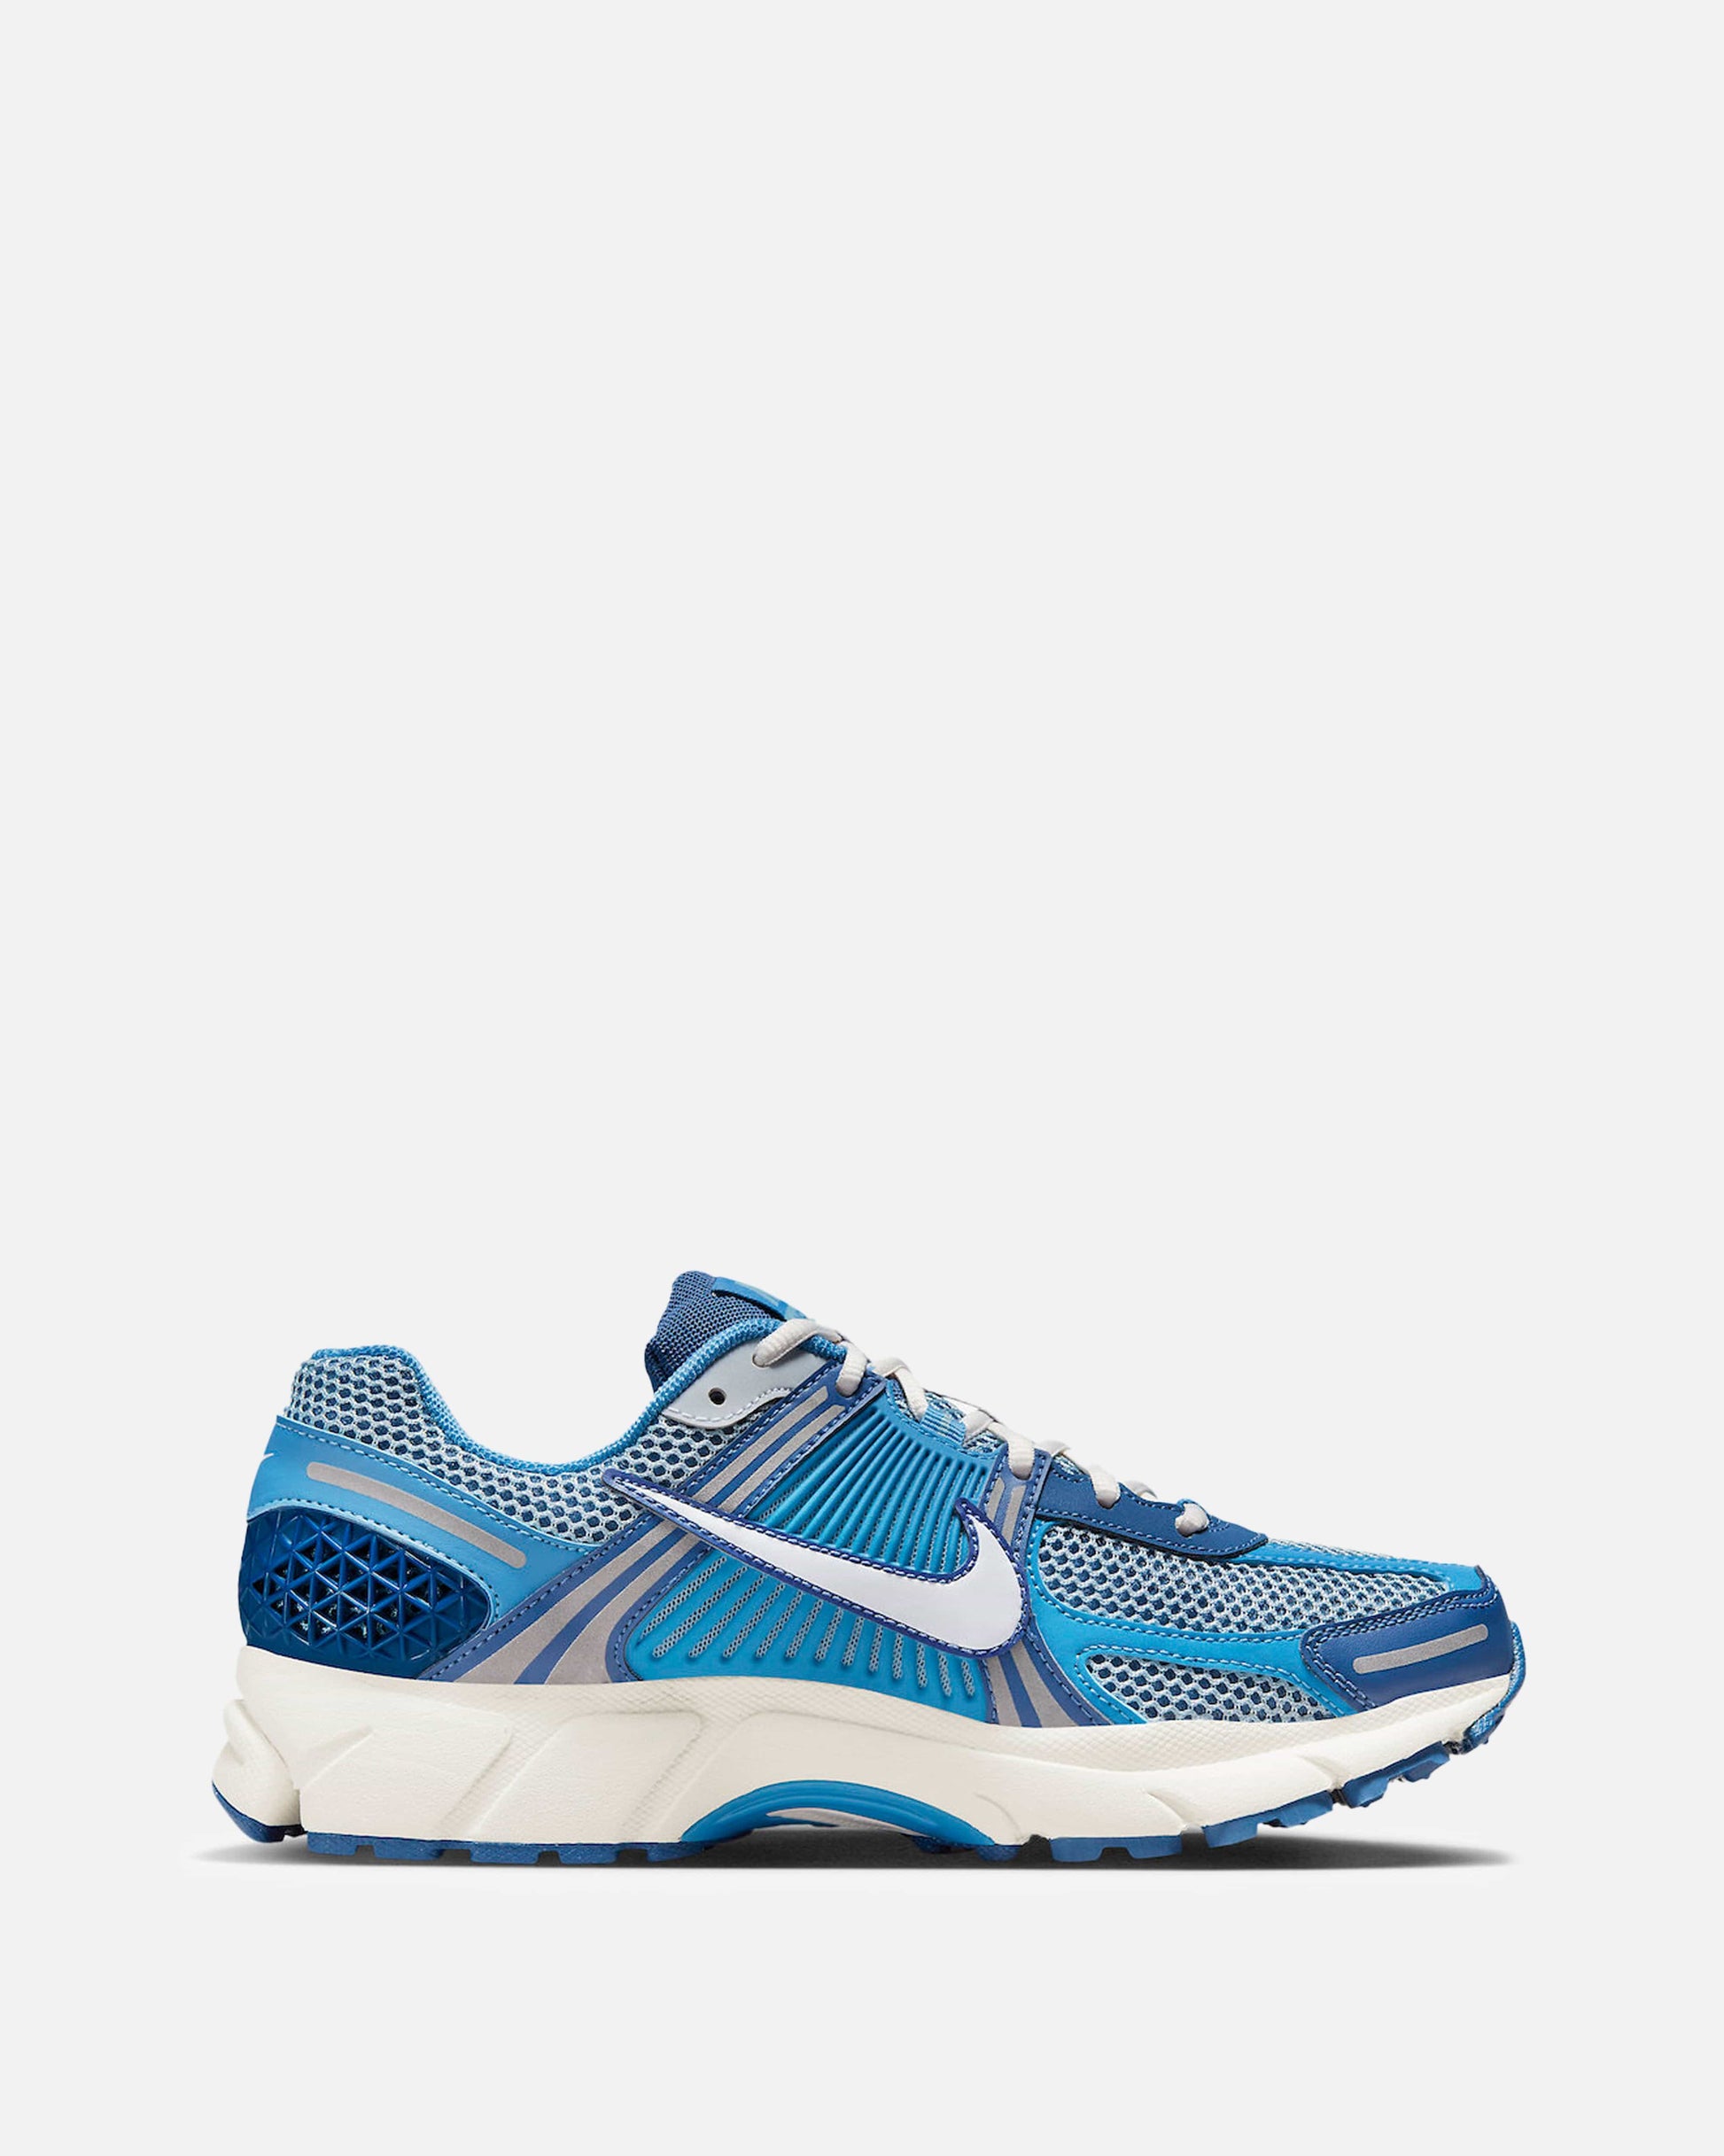 Nike Men's Sneakers Zoom Vomero 5 'Worn Blue'